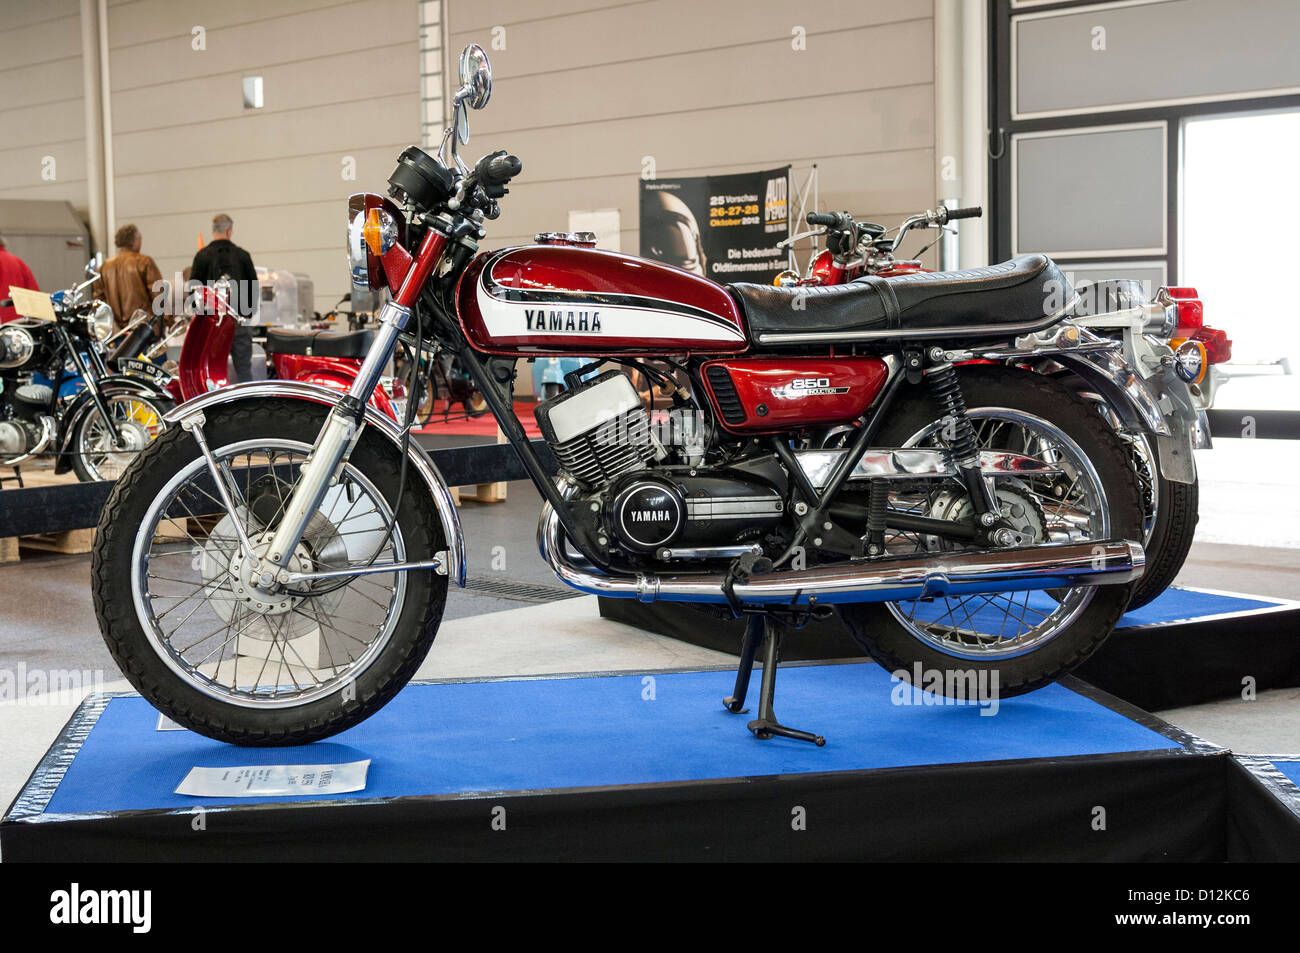 Yamaha RD 350 klassische japanische Motorrad der 70er Jahre Stockfotografie  - Alamy